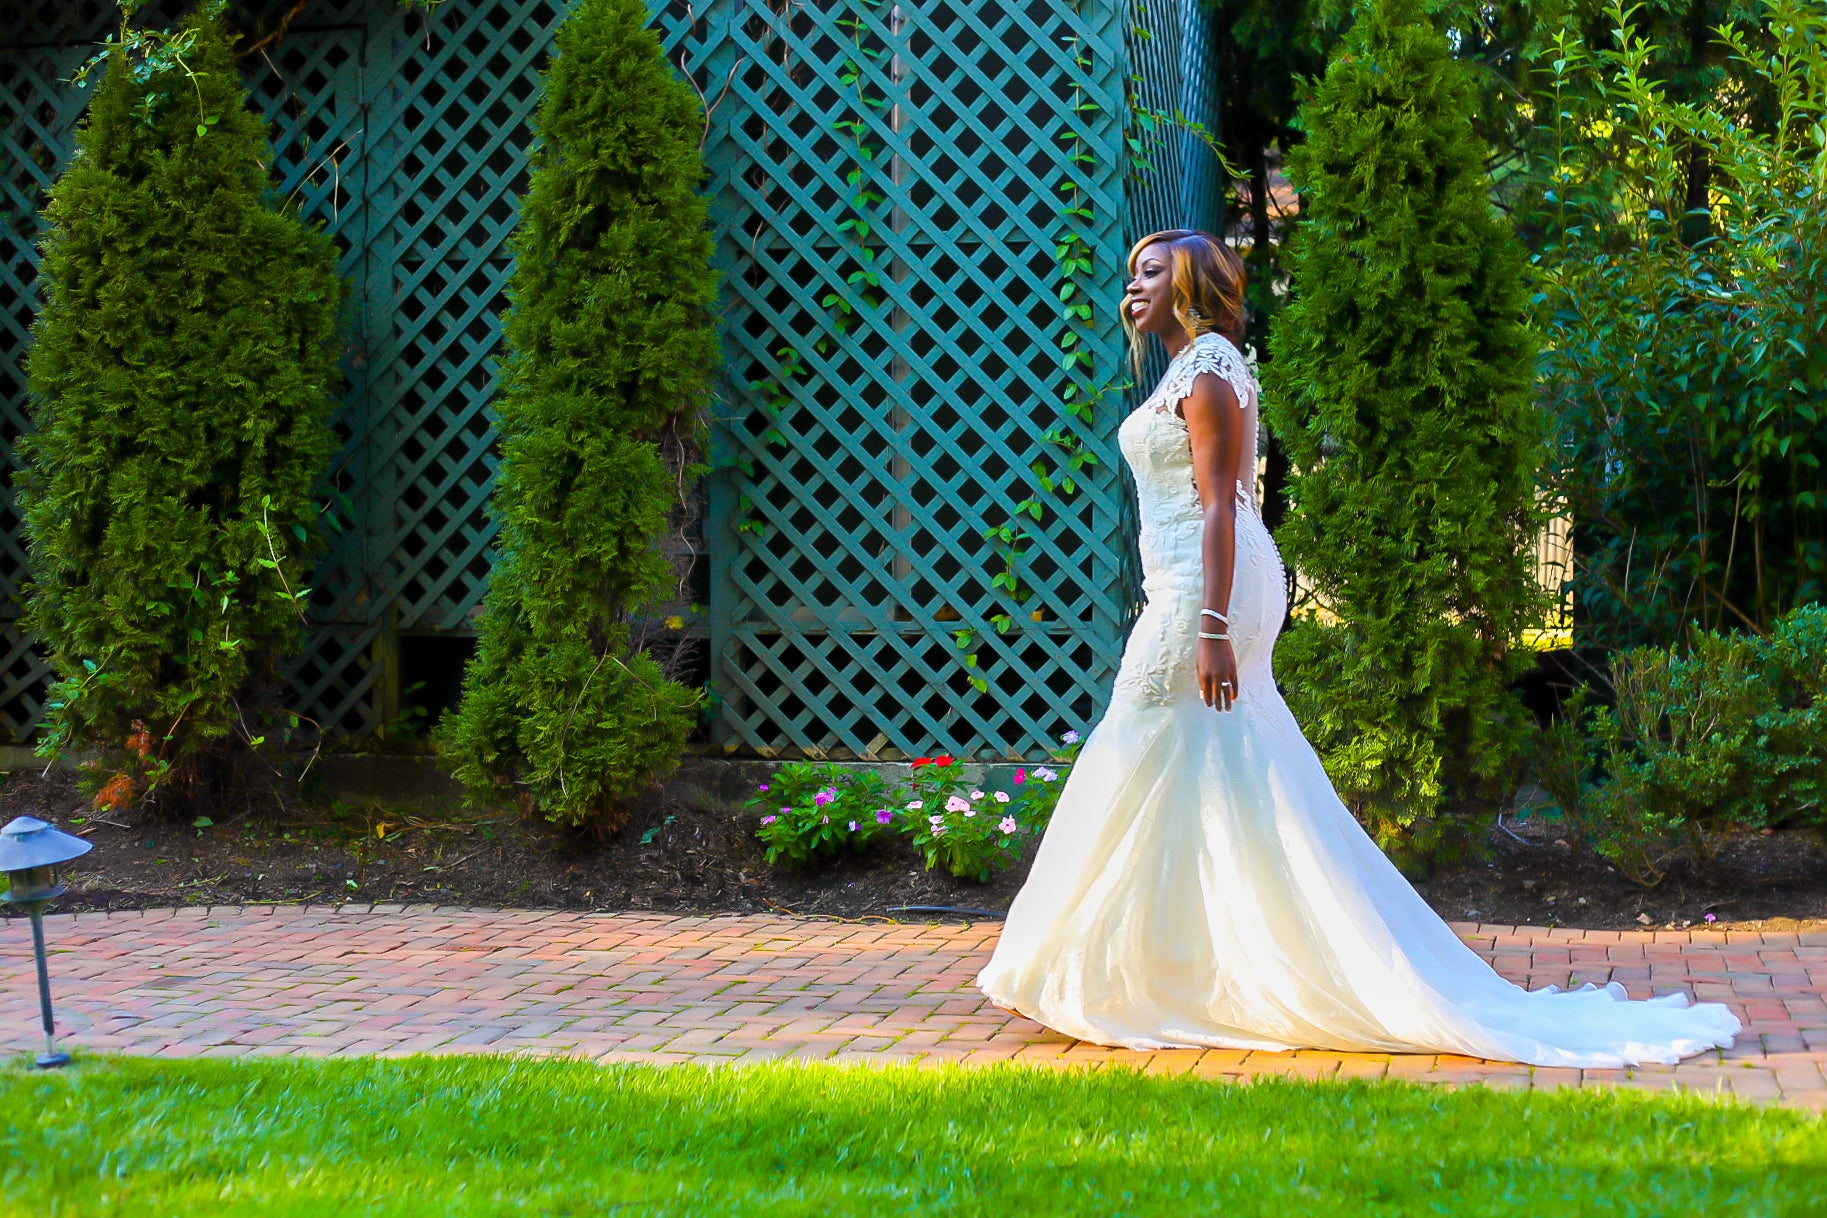 Bridal Bliss: See Sheldon and Nadine's Feel-Good Modern Wedding Photos
